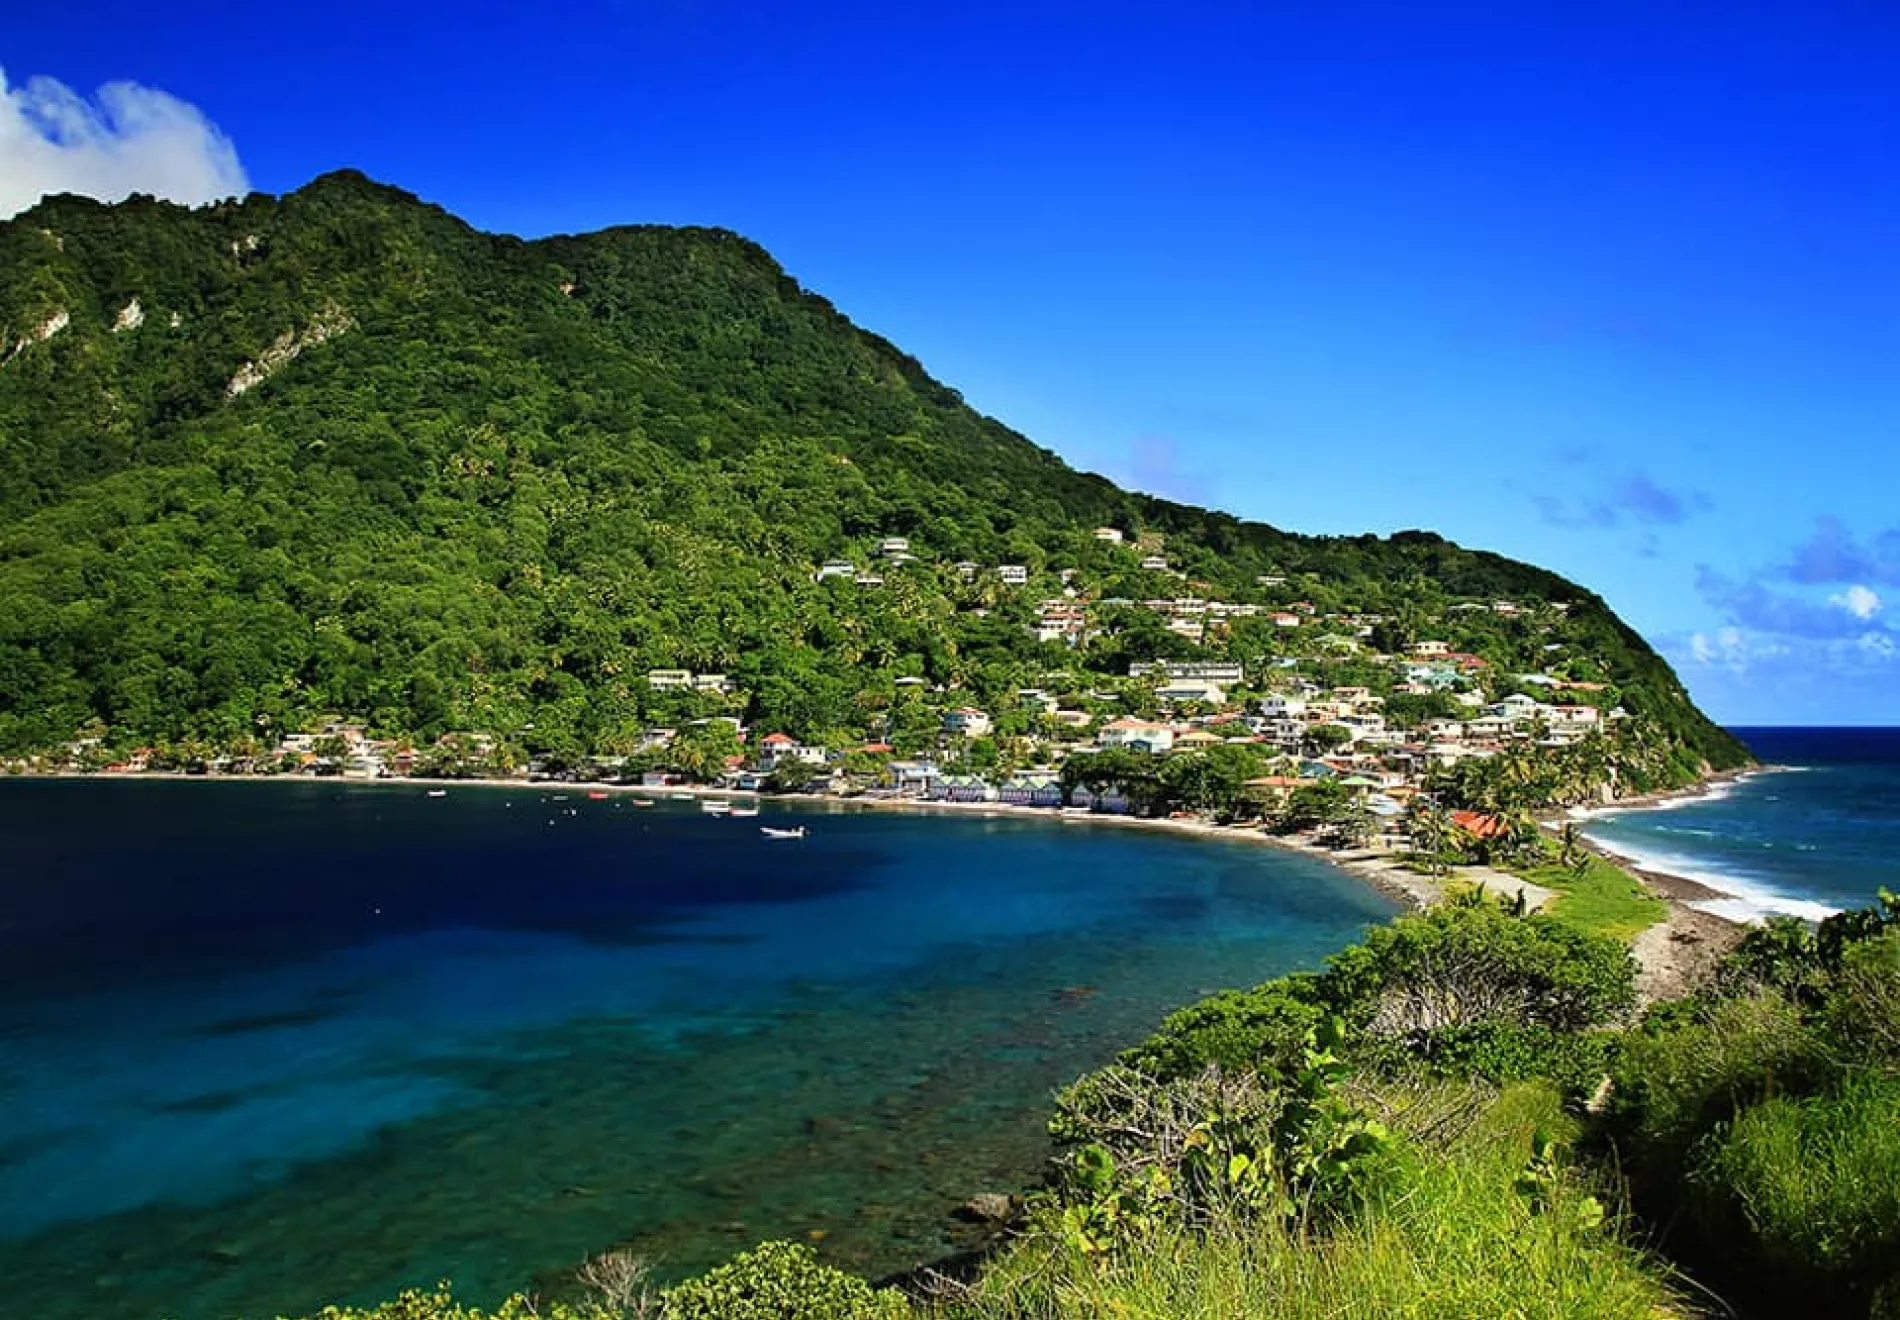 Scotts-Head-fishing-village-in-Dominica